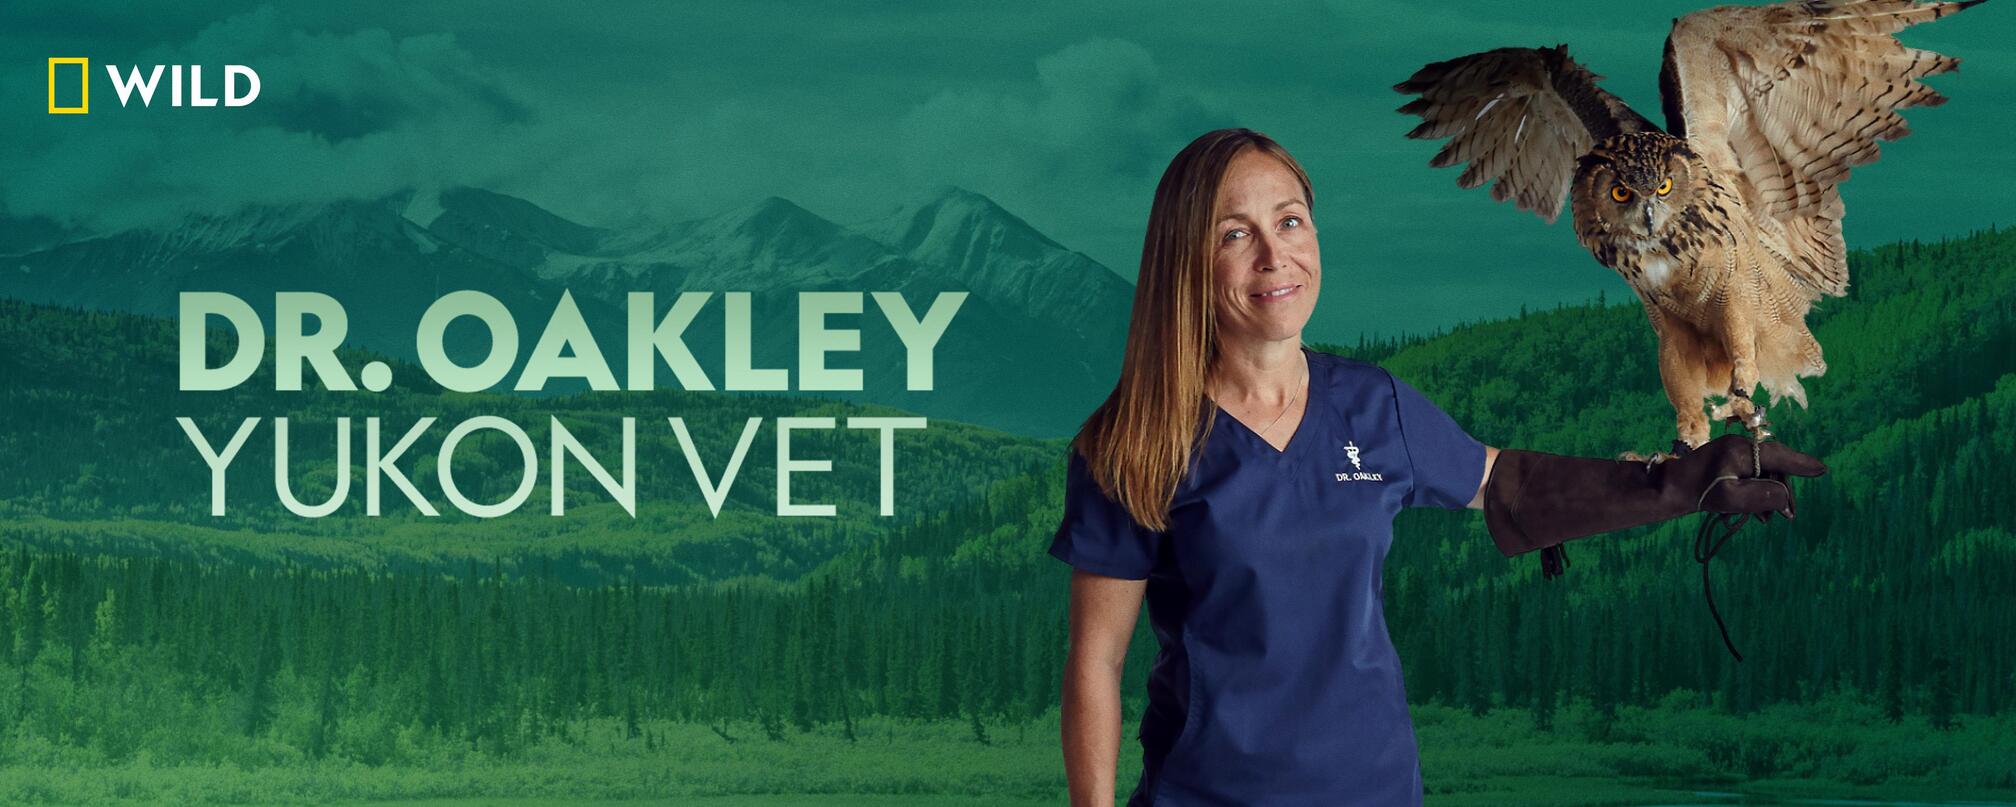 About Dr. Oakley, Yukon Vet TV Show Series